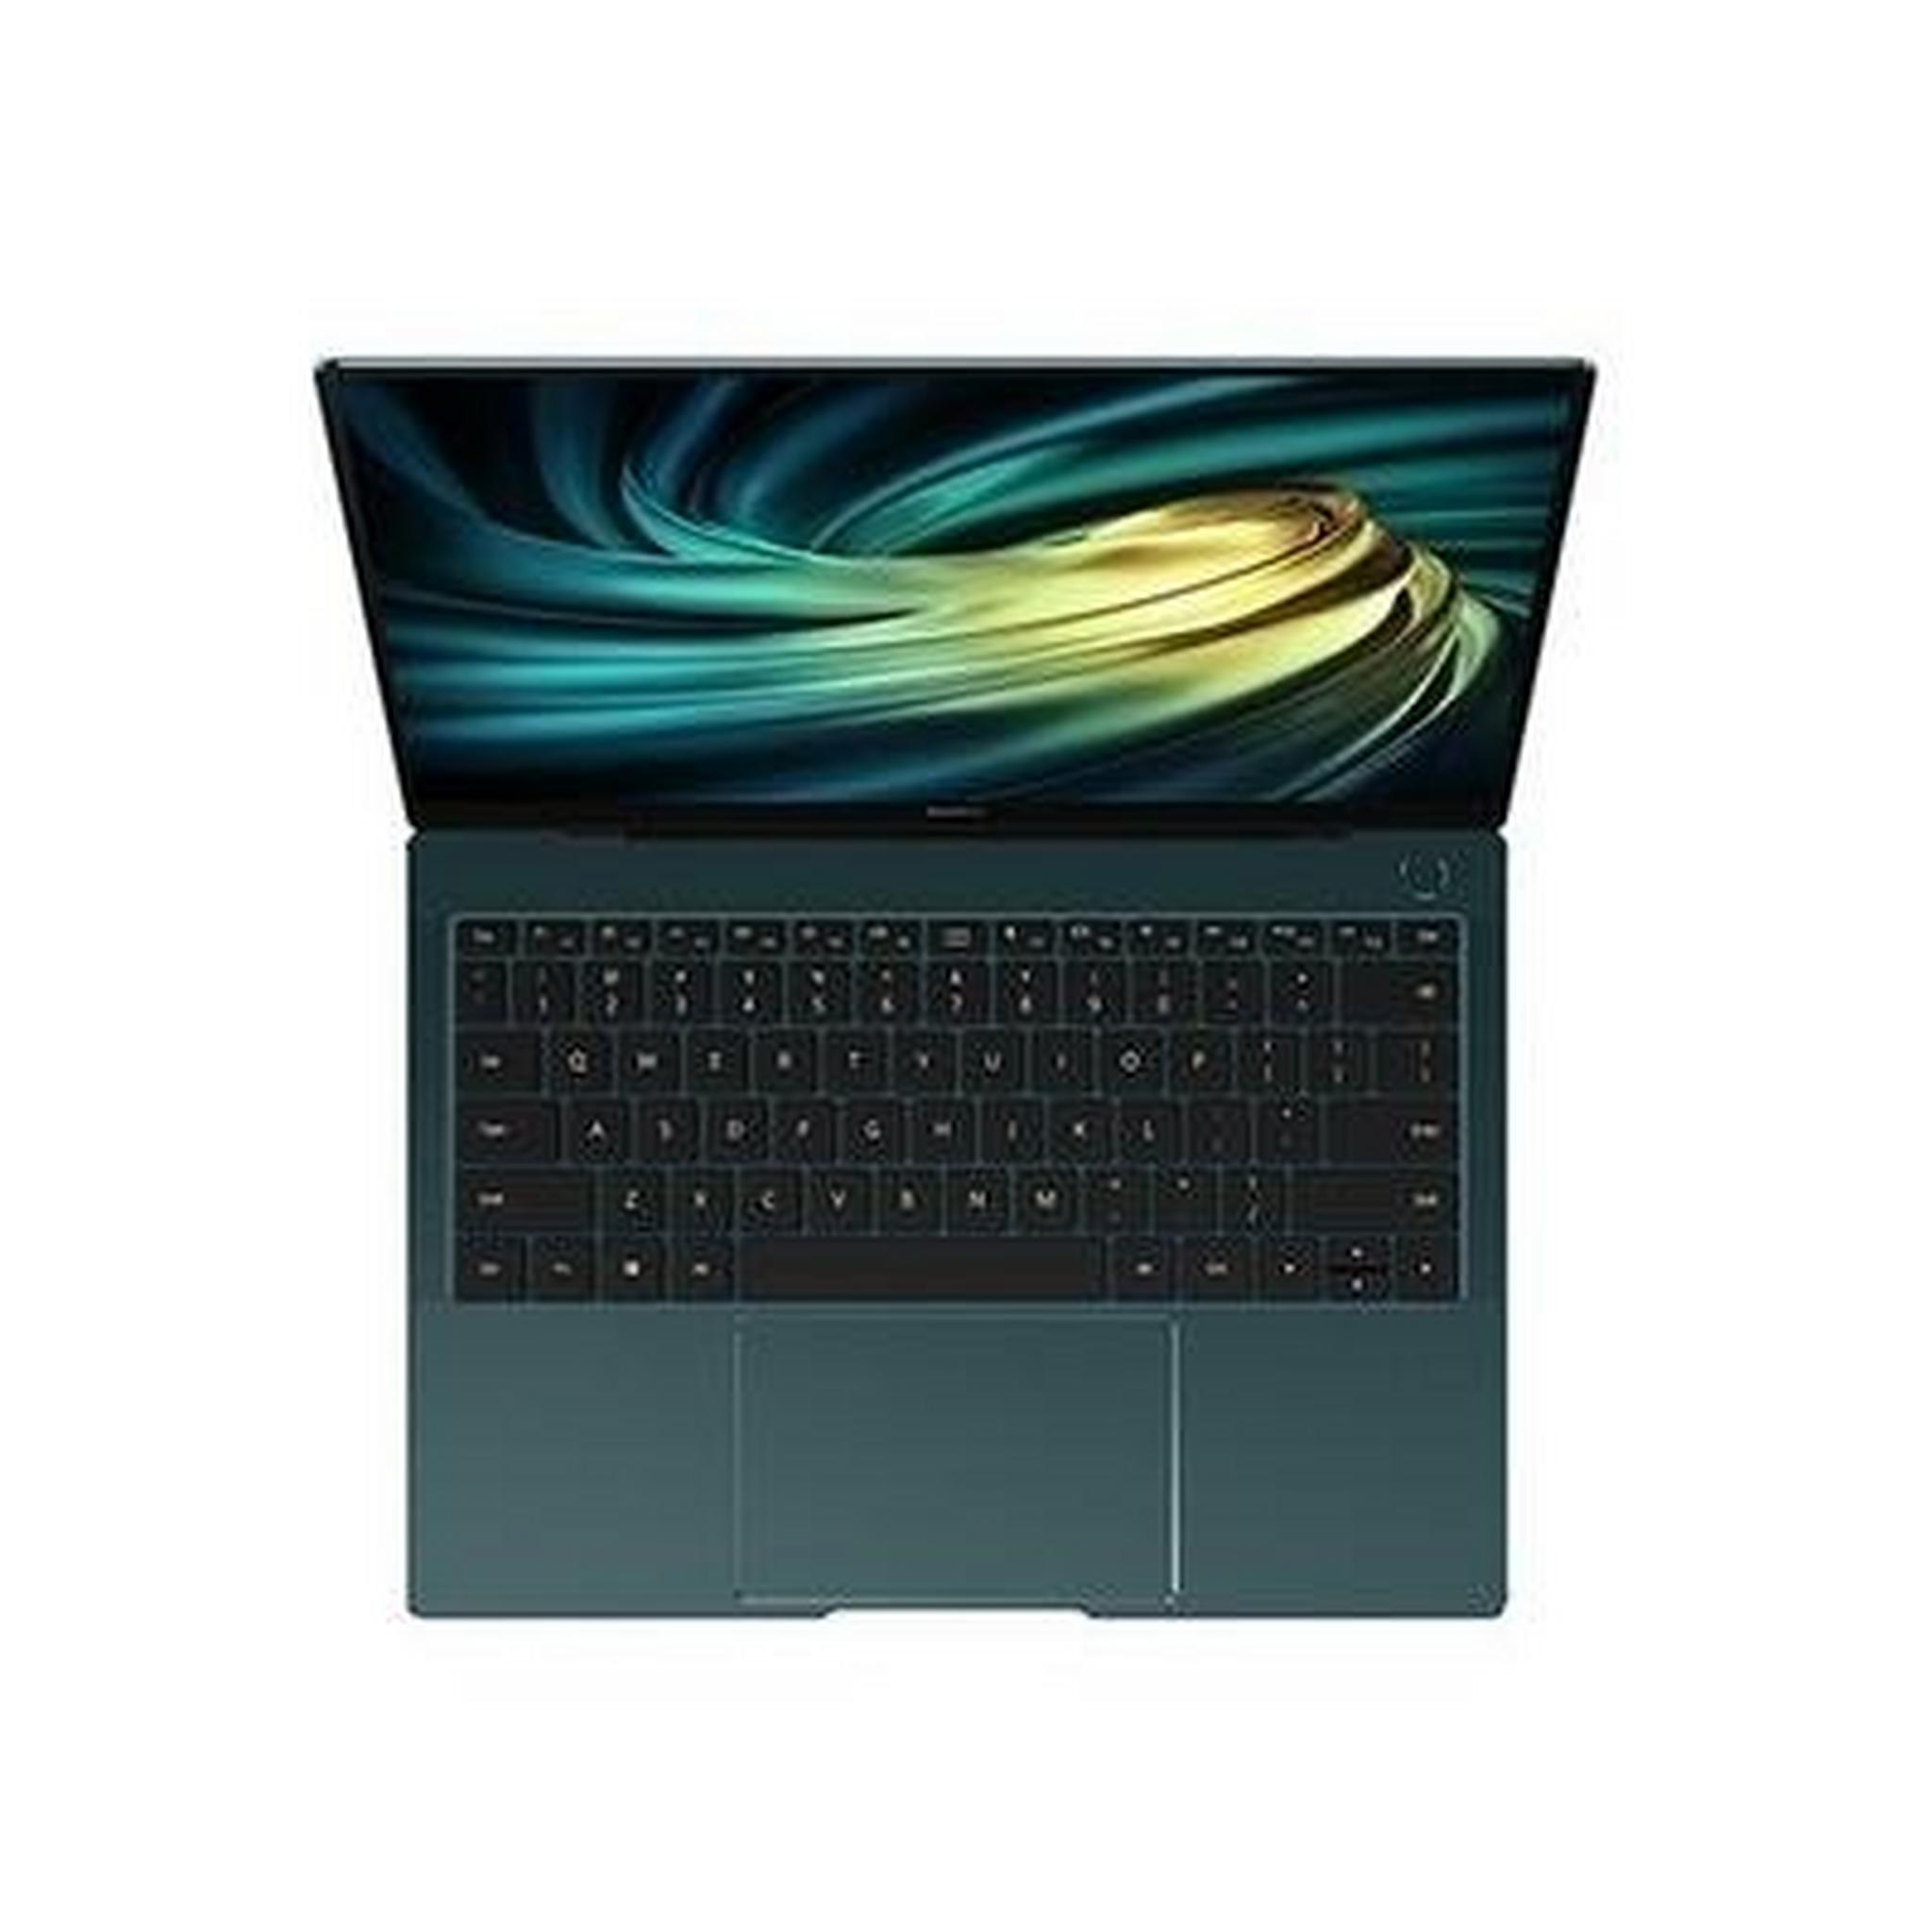 Huawei Matebook X Pro Intel core i7, RAM 16GB, 1TB SSD 13-inch Laptop - Green